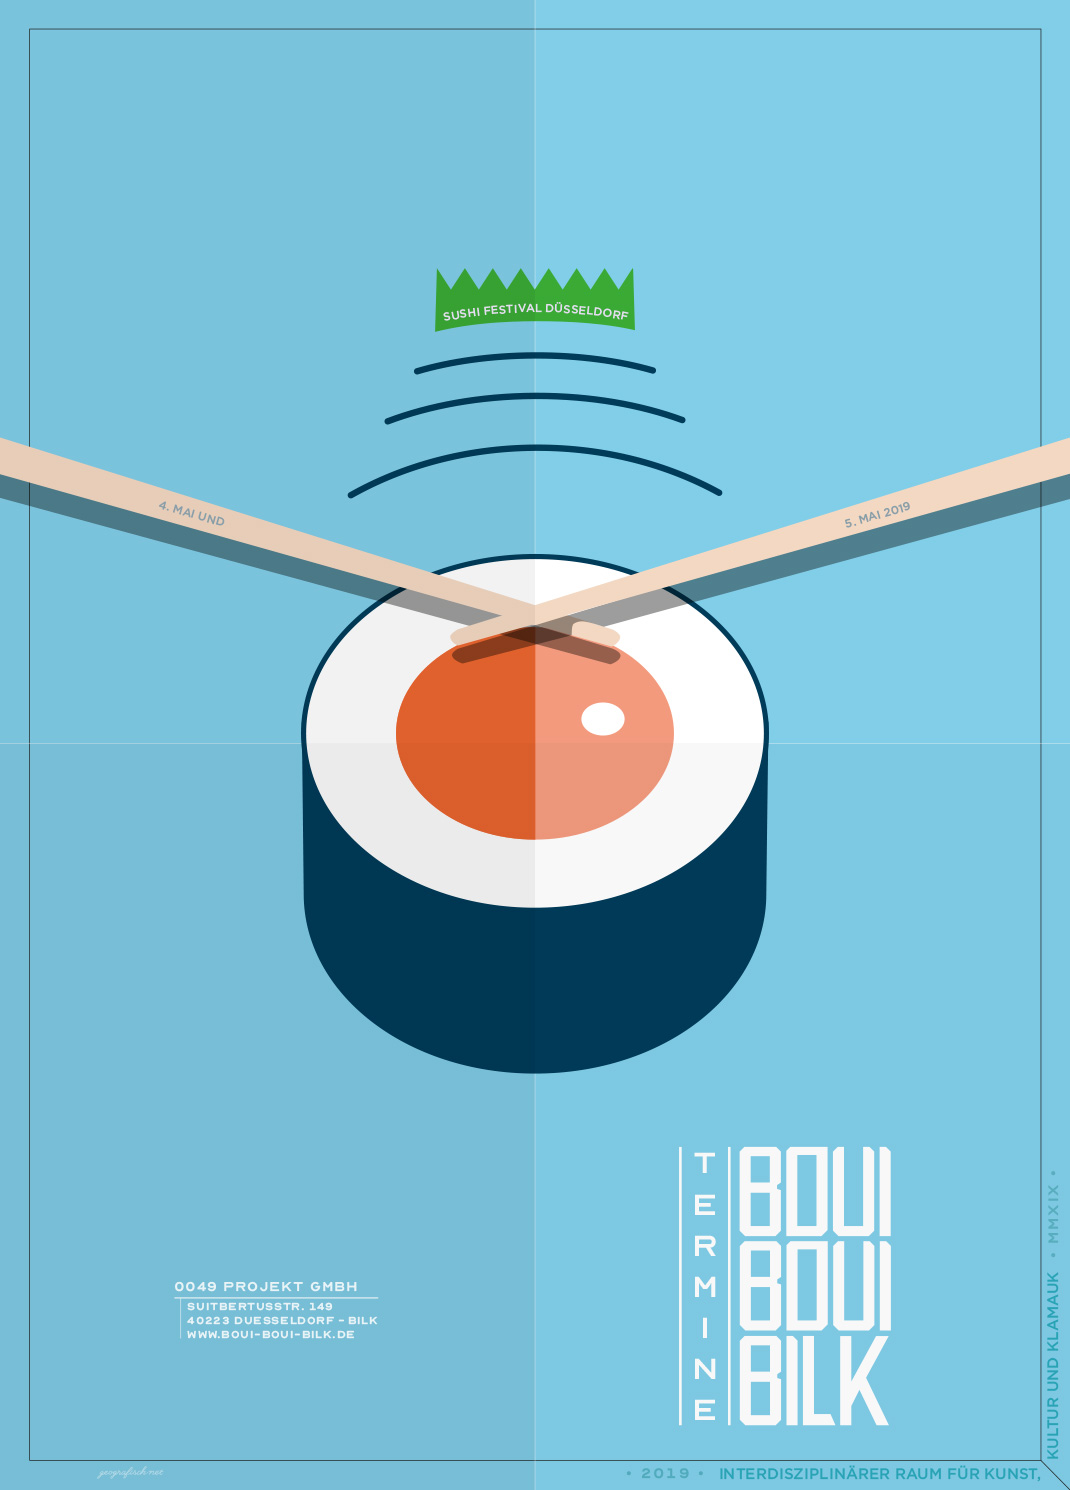 sushi drum, eventfolder, illustrated, vector design, bouibouibilk, düsseldorf, asian food festival,